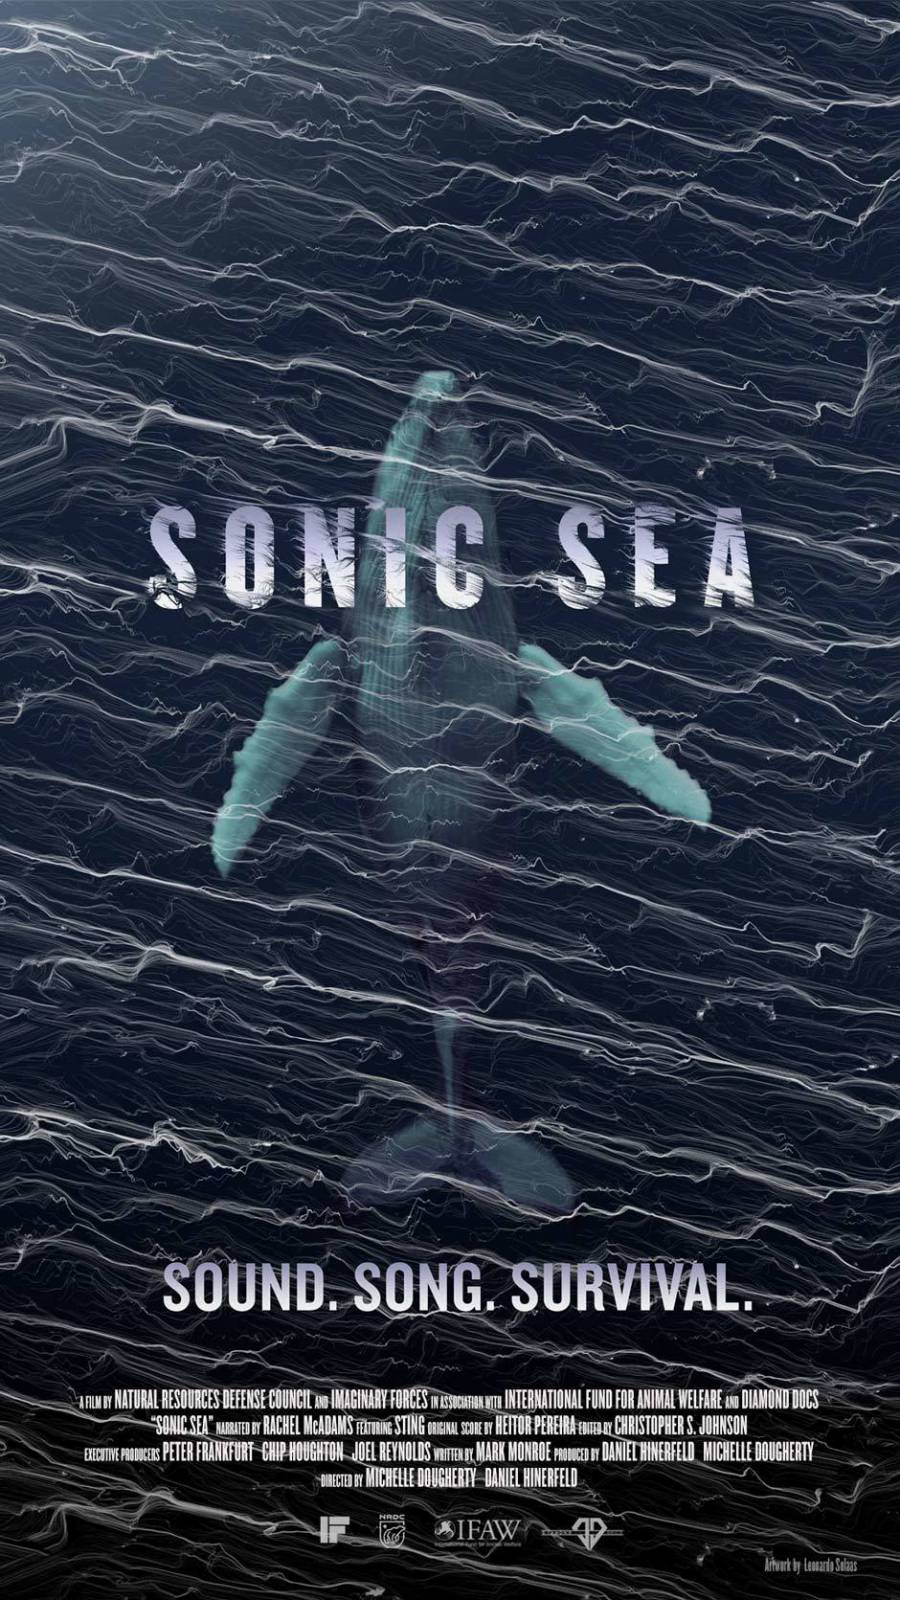 Sonic sea movie documentary documentaire Emmys Awards IFAW